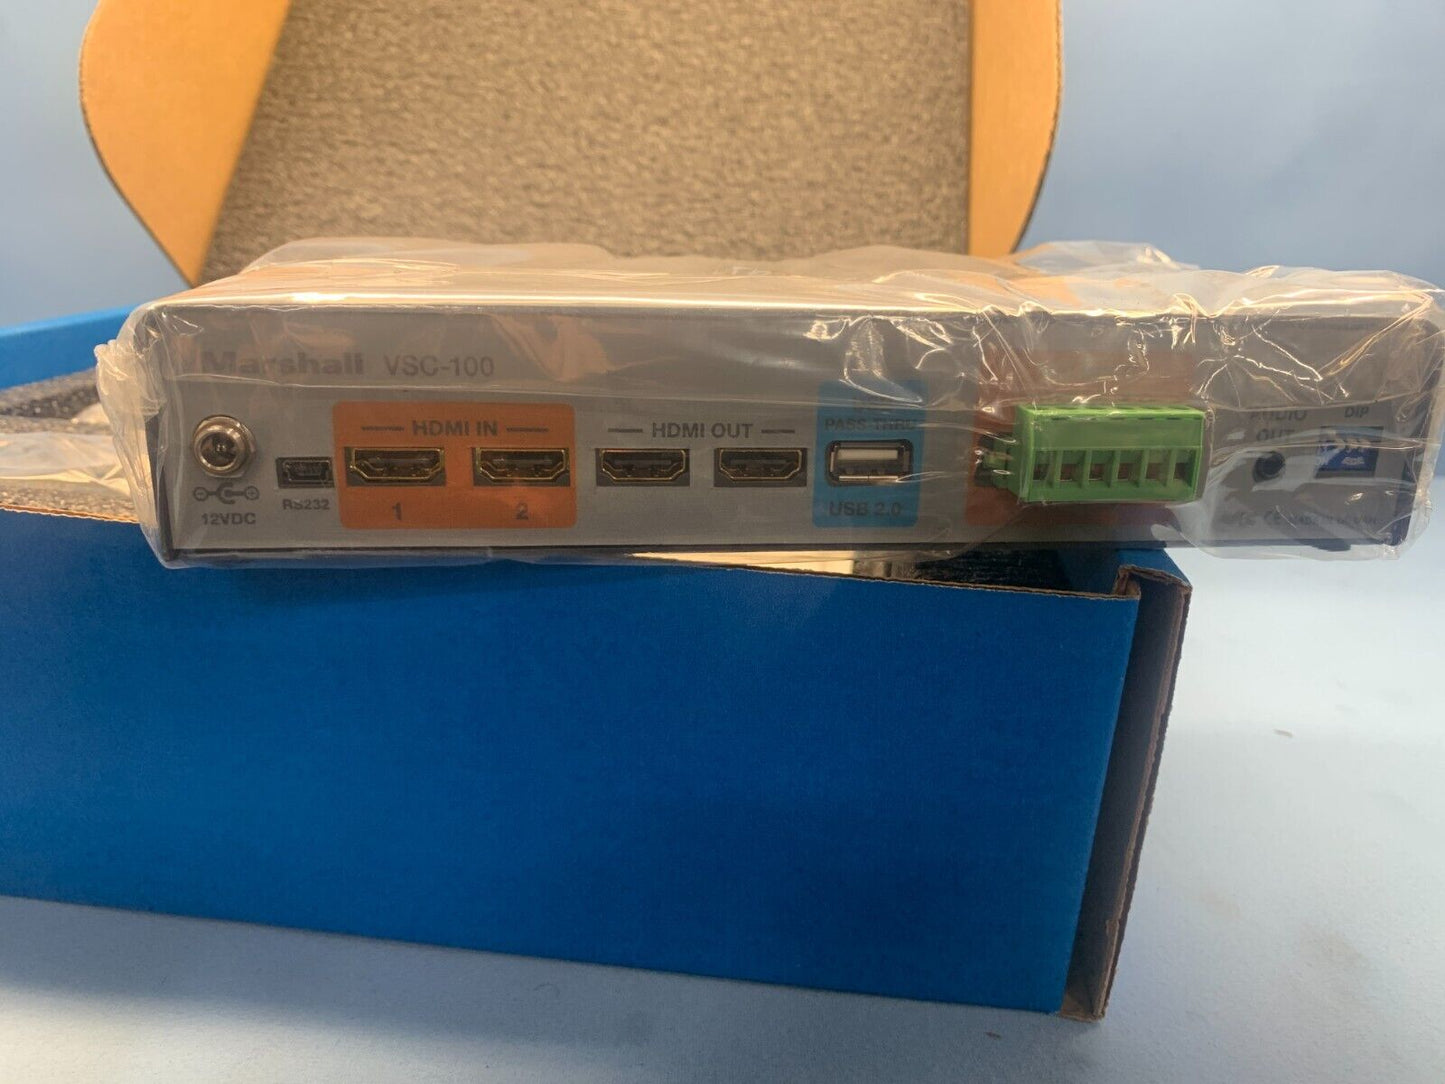 Marshall VSC-100 AV Consolidator Bridge with Dual HDMI and USB Pass-Through